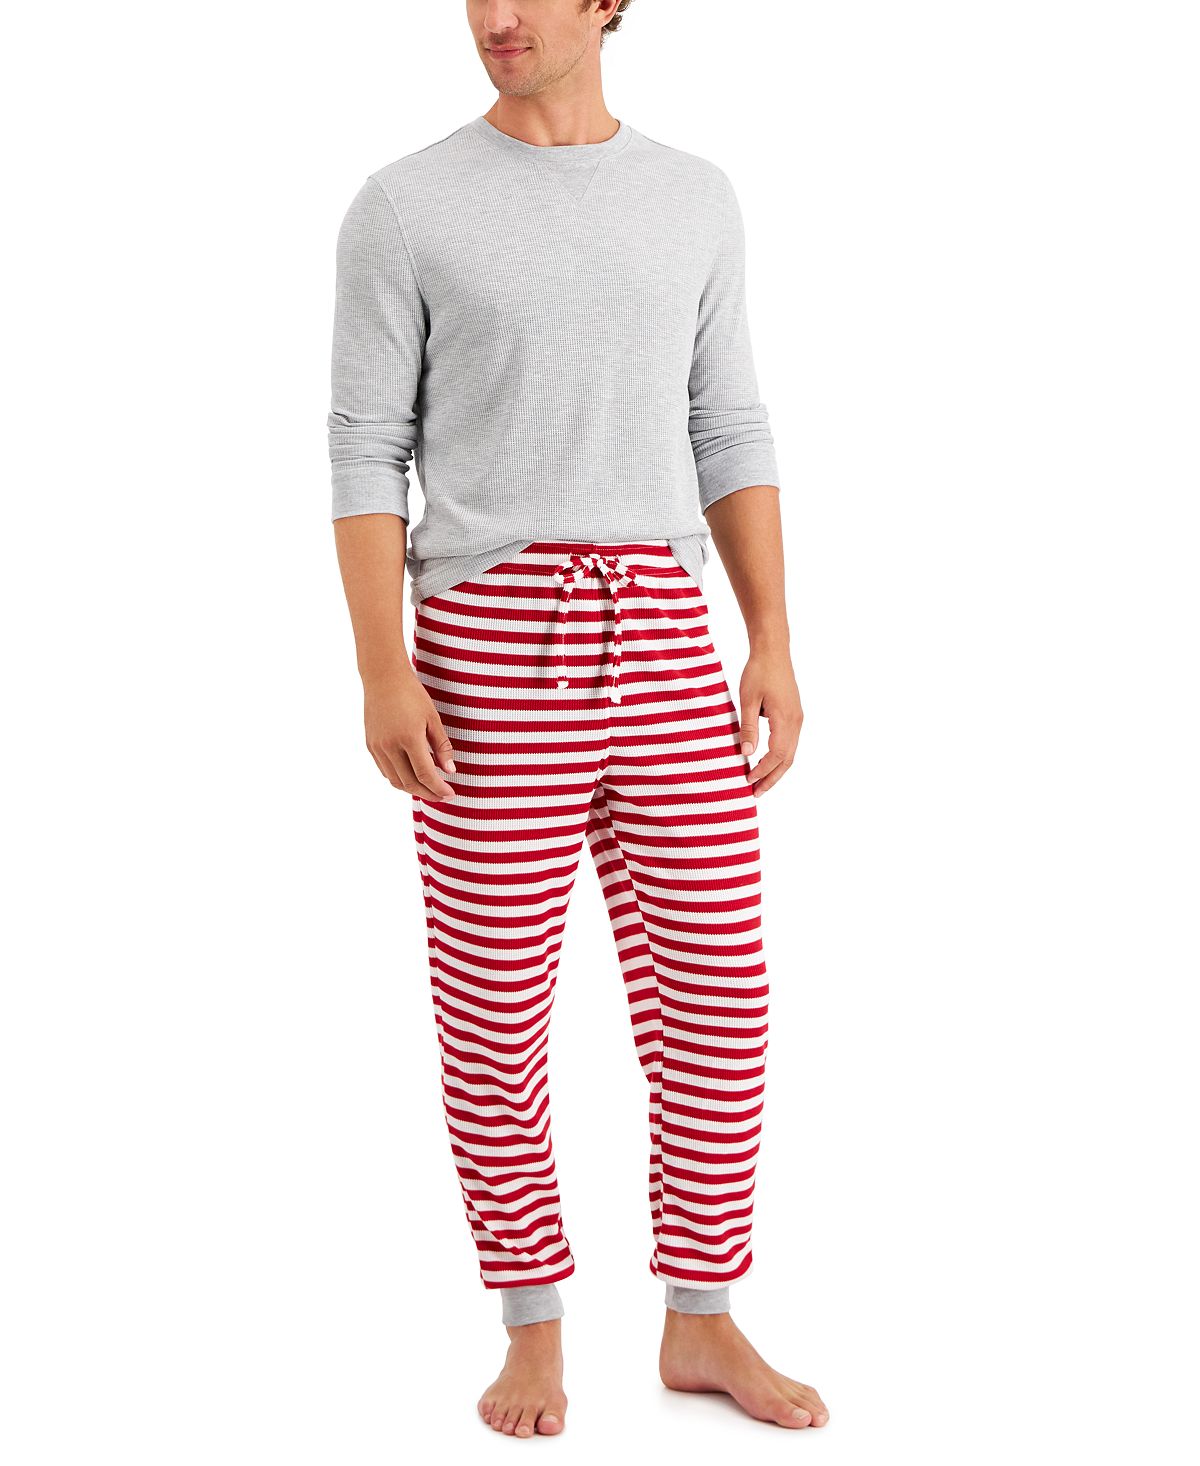 Family Pajamas Matching Solid Top & Striped Pants Thermal Family Pajama Set Red Stripe